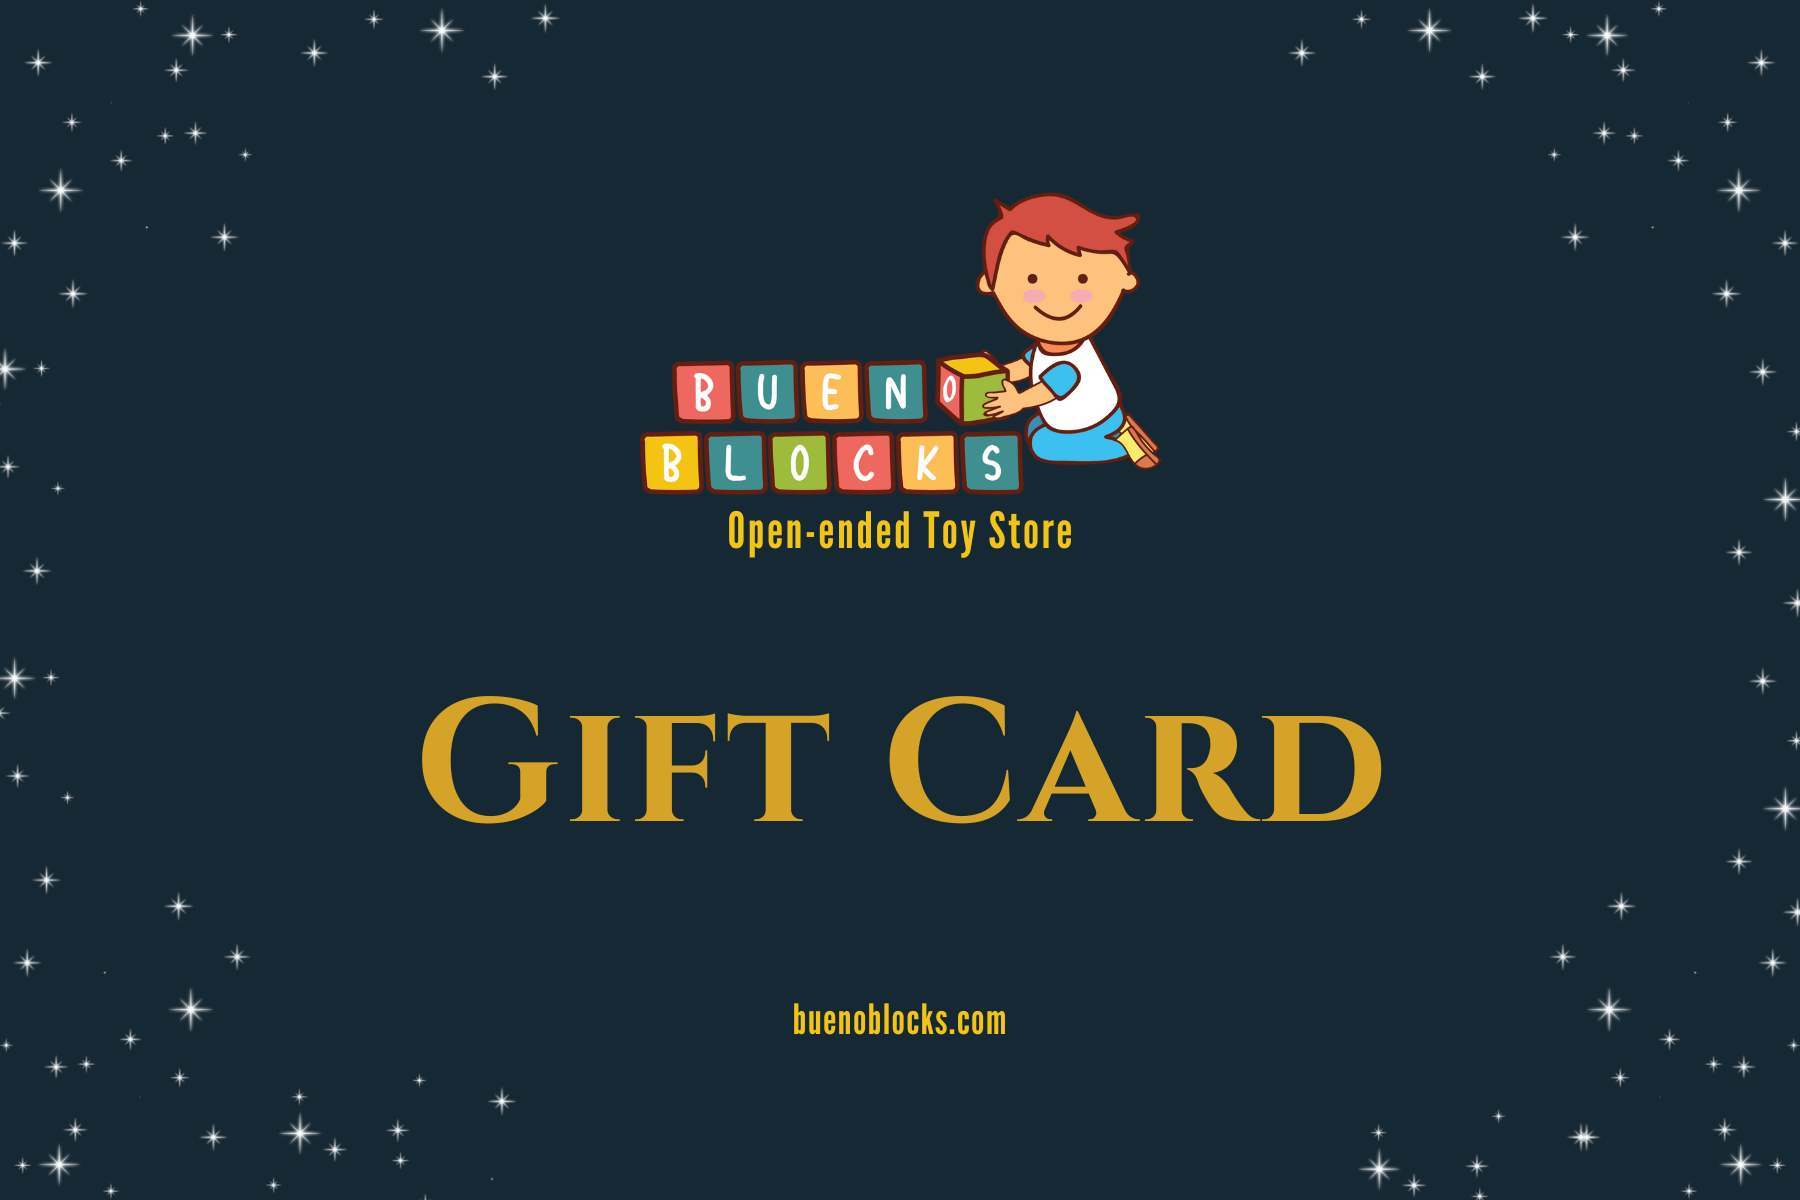 Bueno Blocks Gift Card - Bueno Blocks